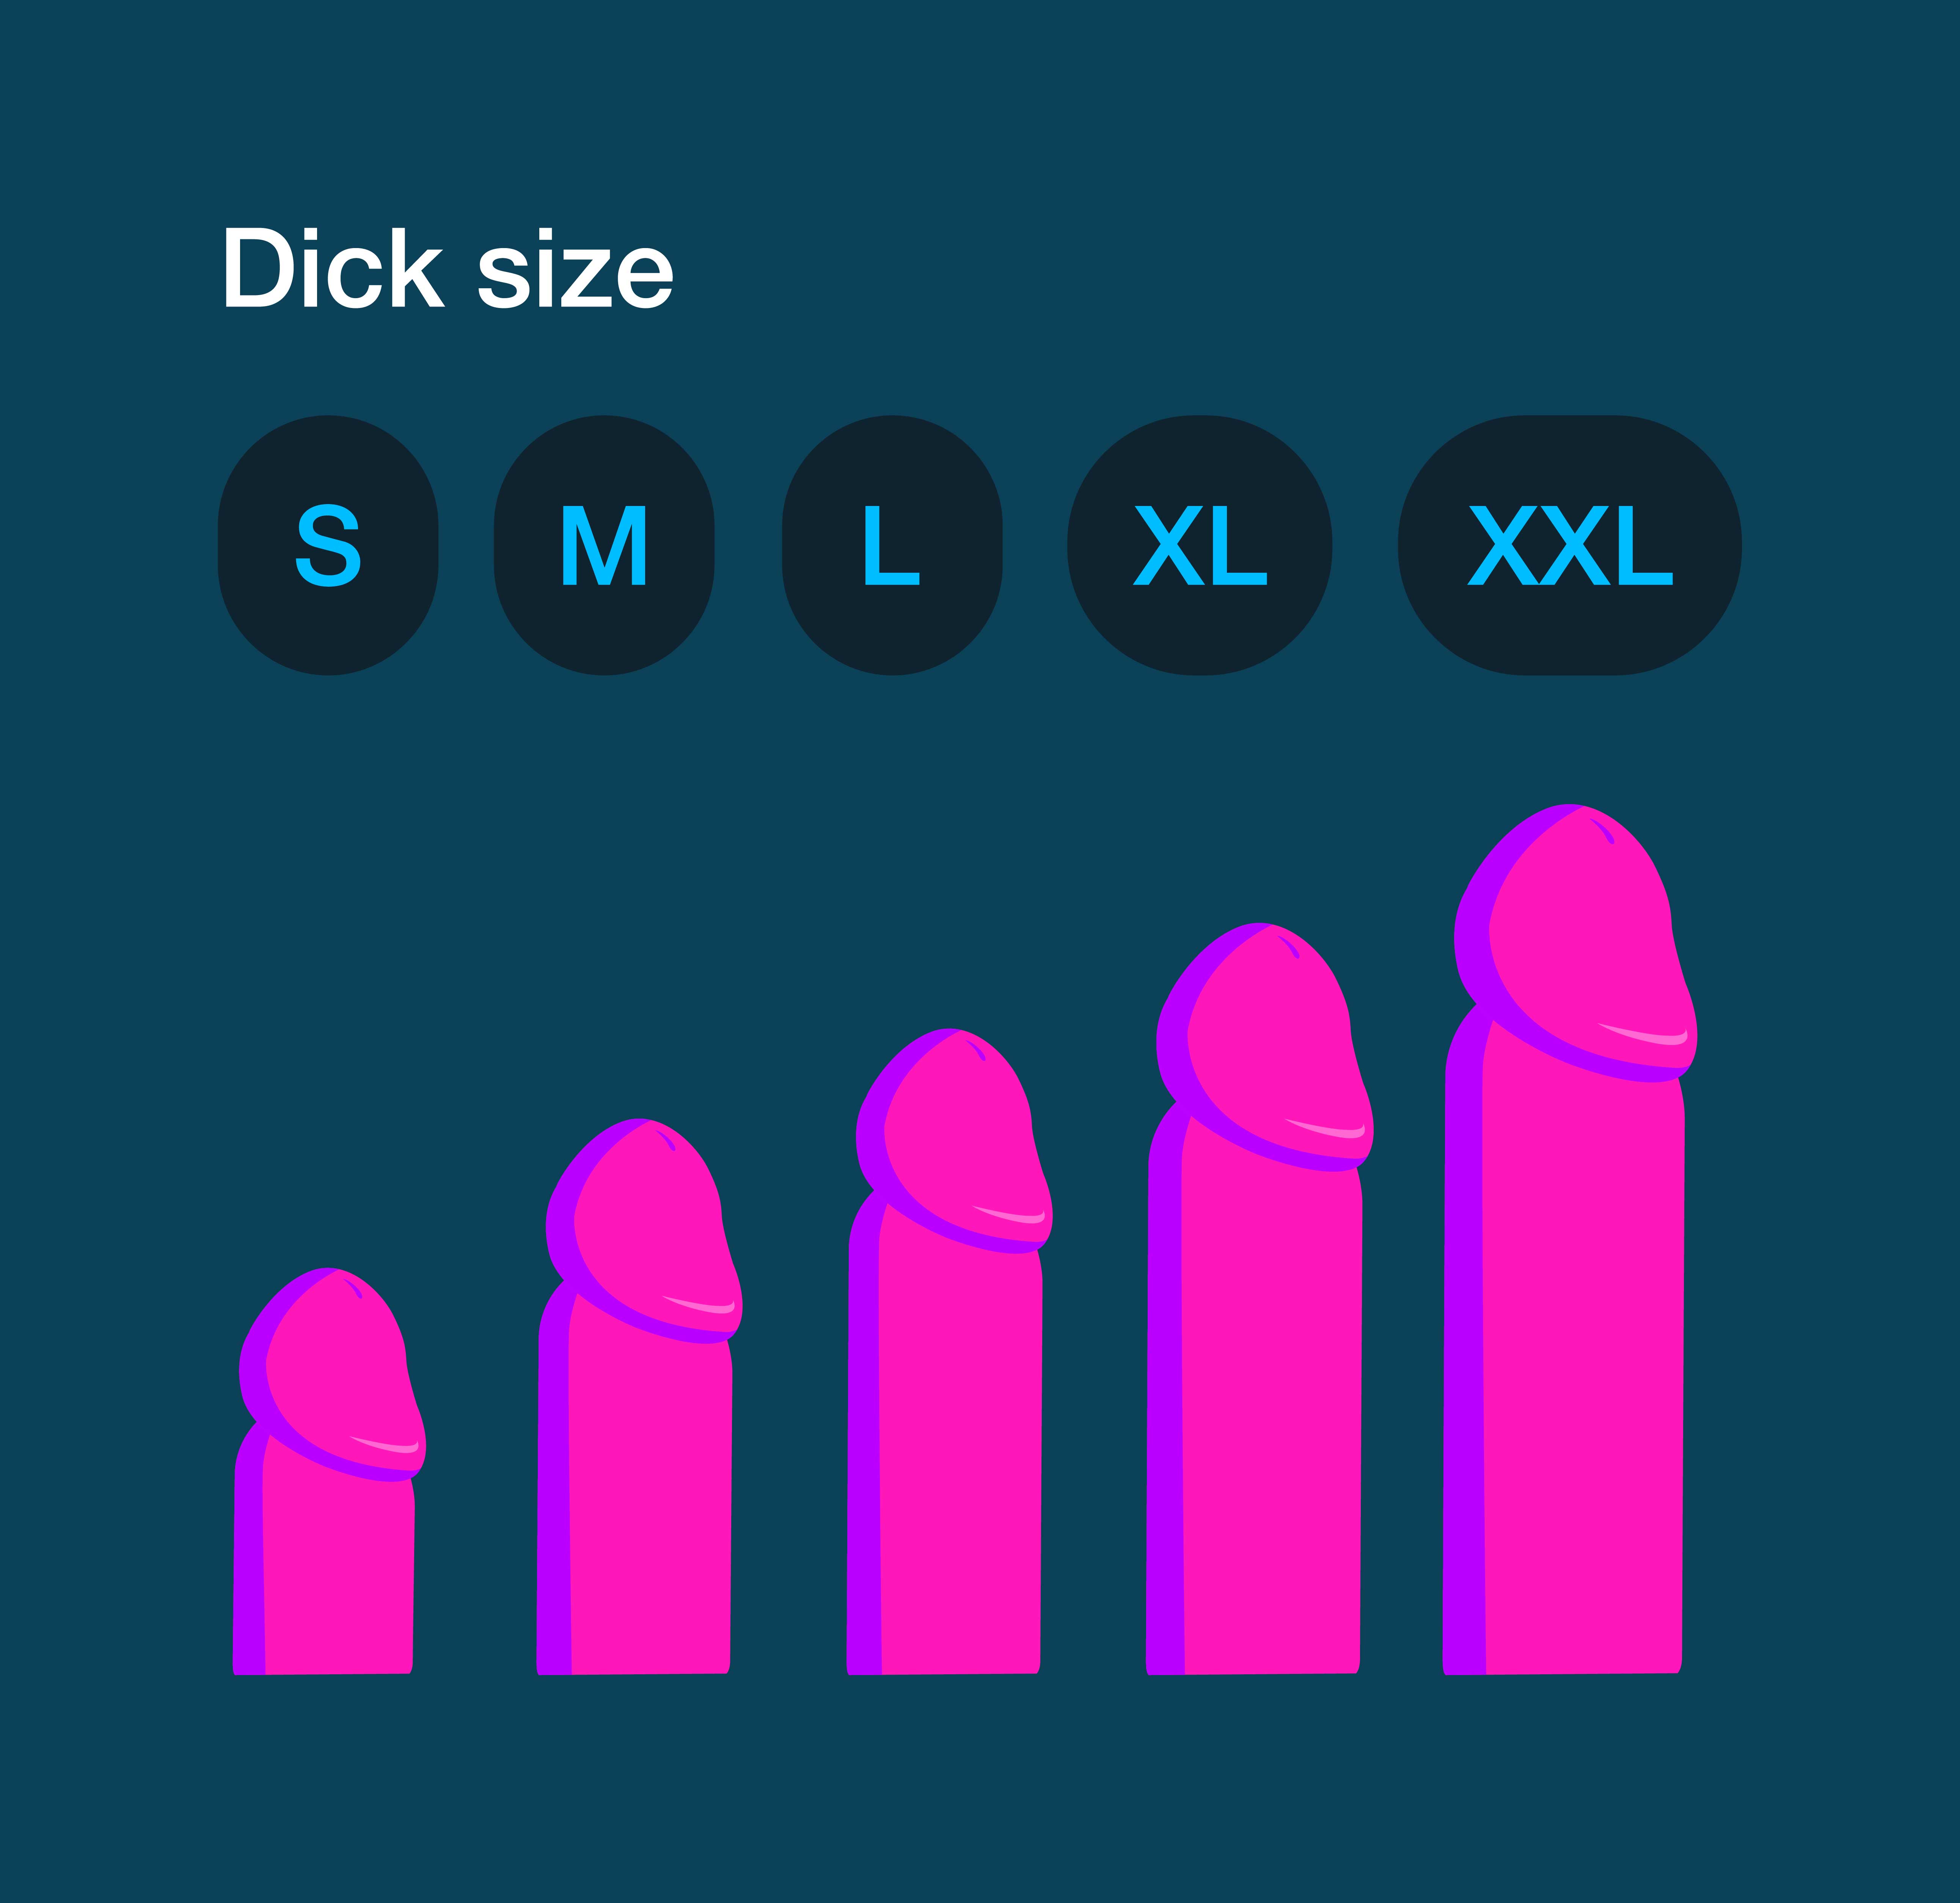 Trumps dick size